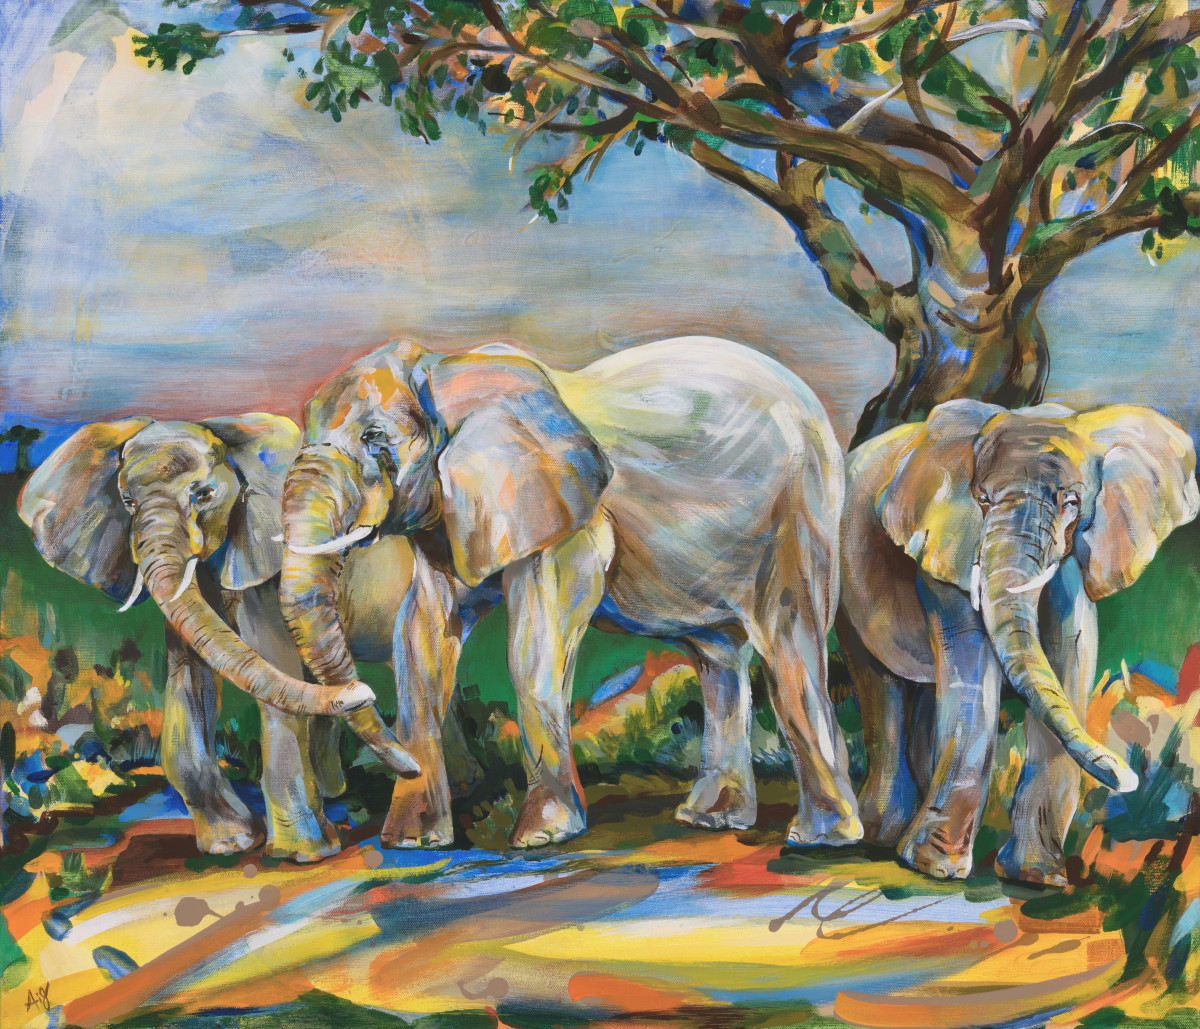 Under the Tree (Elephants) by Anna Iris Graham 